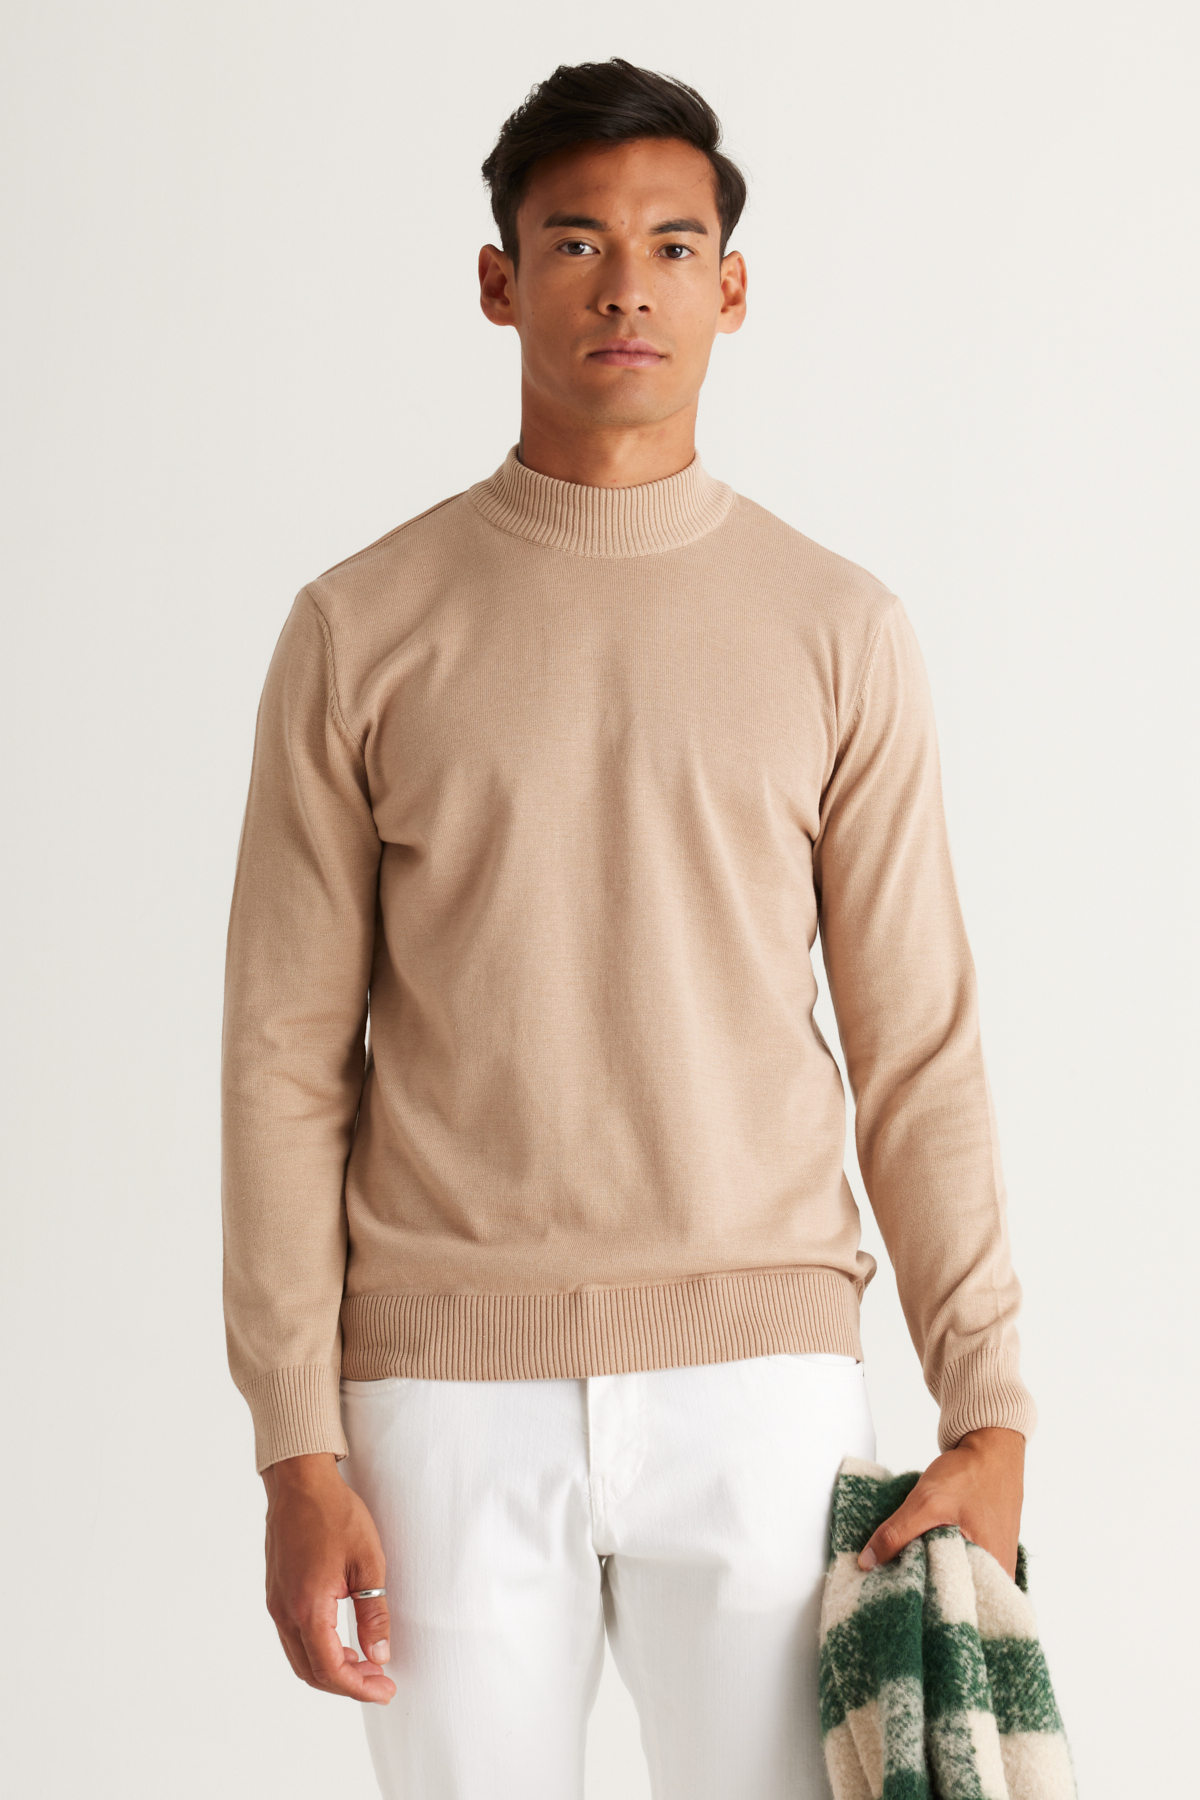 ALTINYILDIZ CLASSICS Men's Beige Melange Standard Fit Normal Cut Half Turtleneck Cotton Knitwear Sweater.